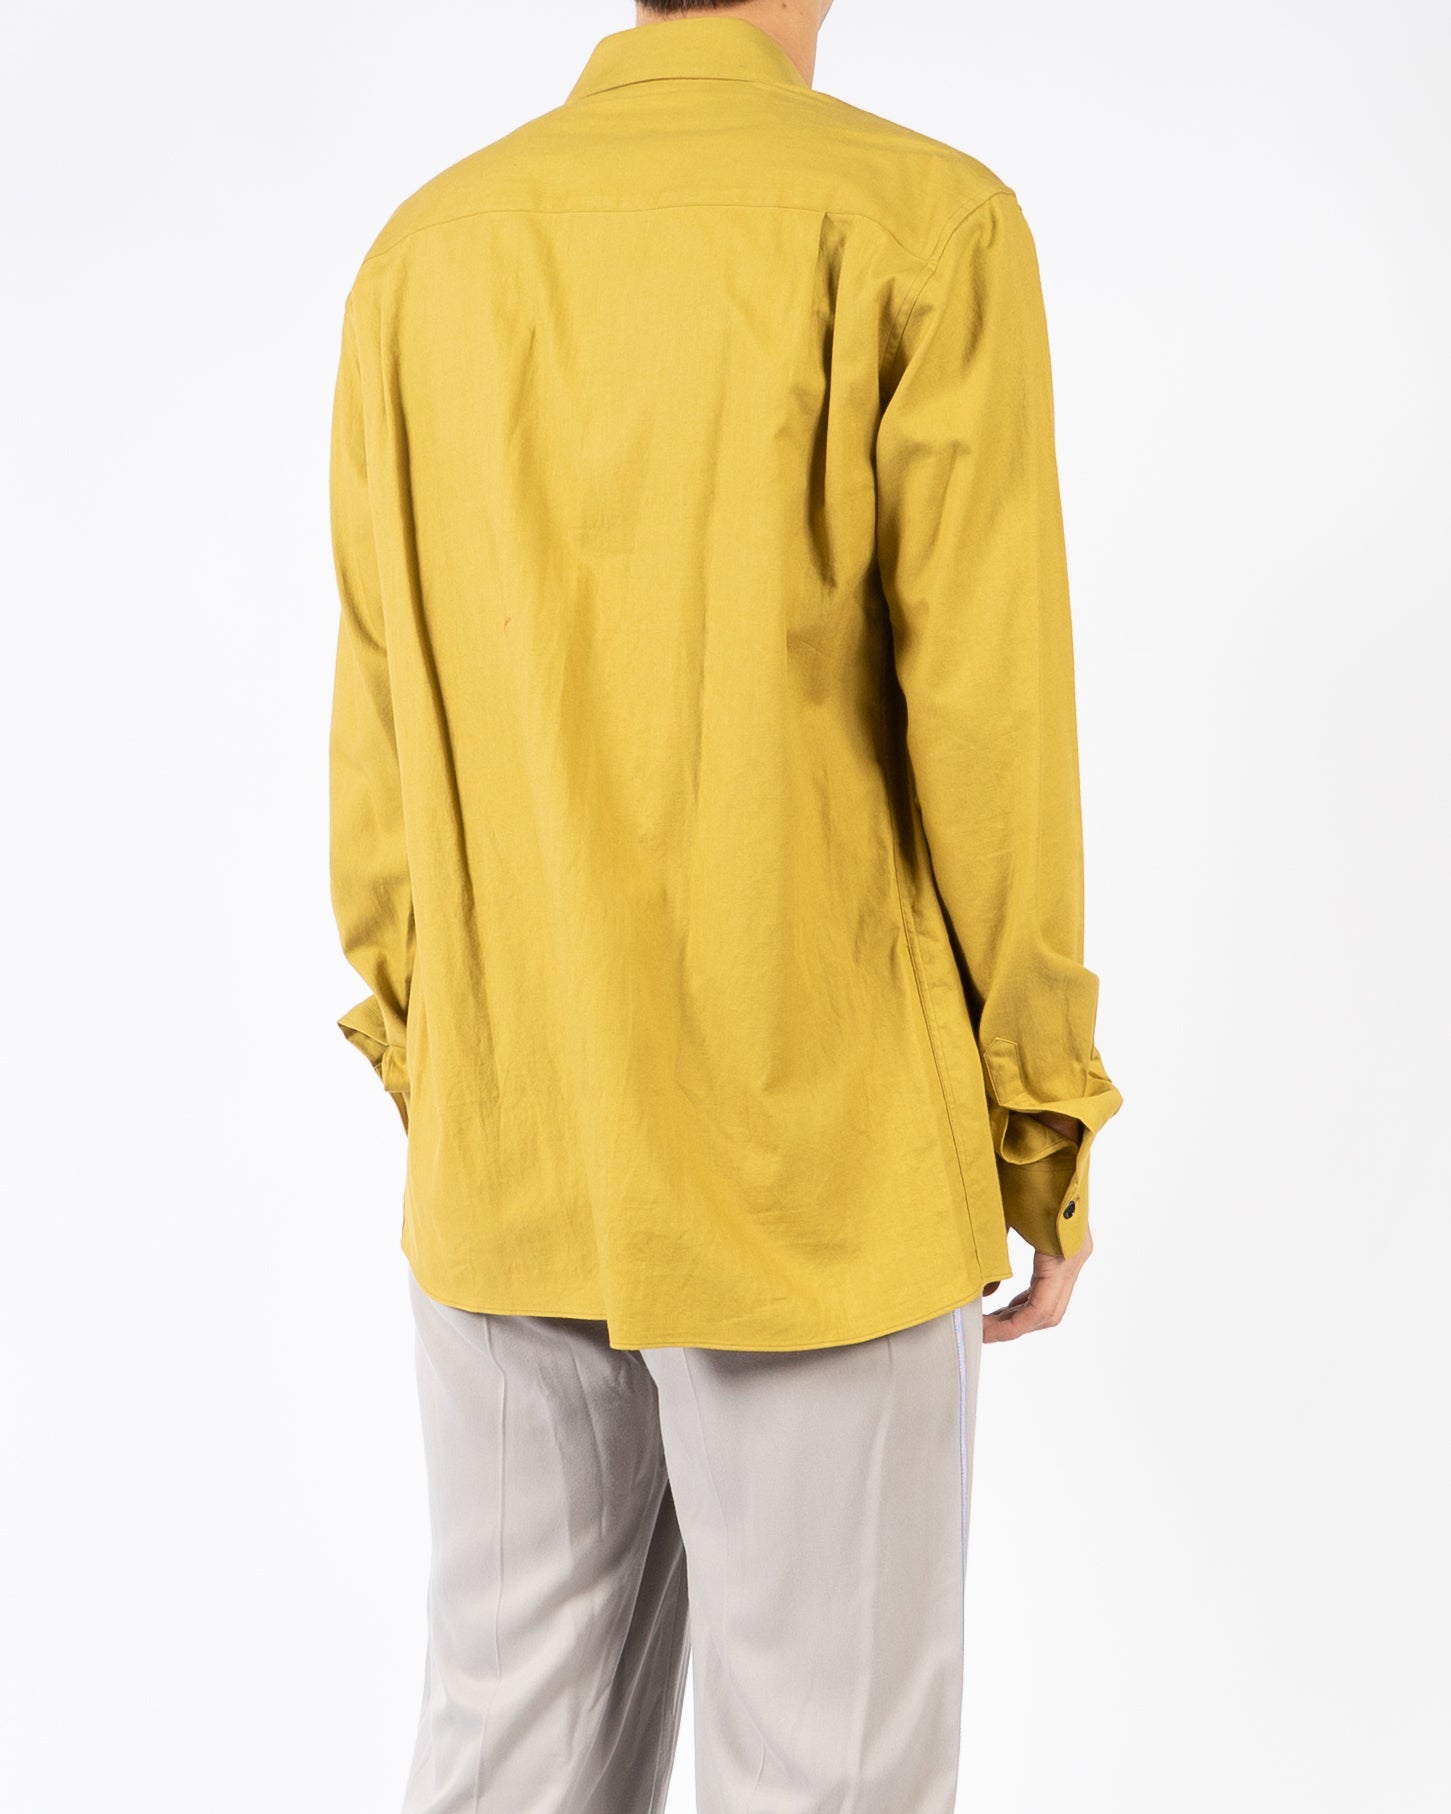 FW17 Mustard Yellow Cotton Shirt